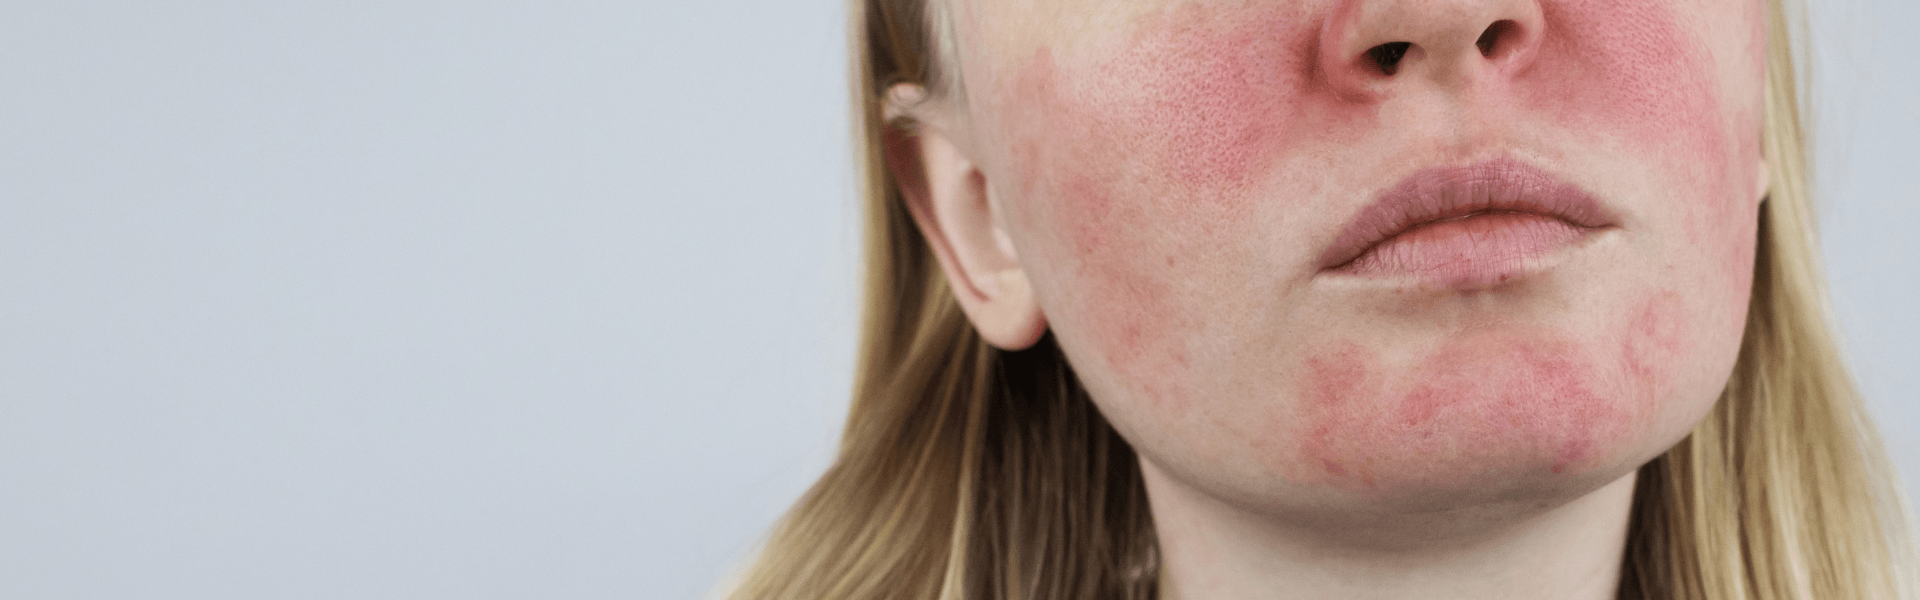 bright pink spots on skin